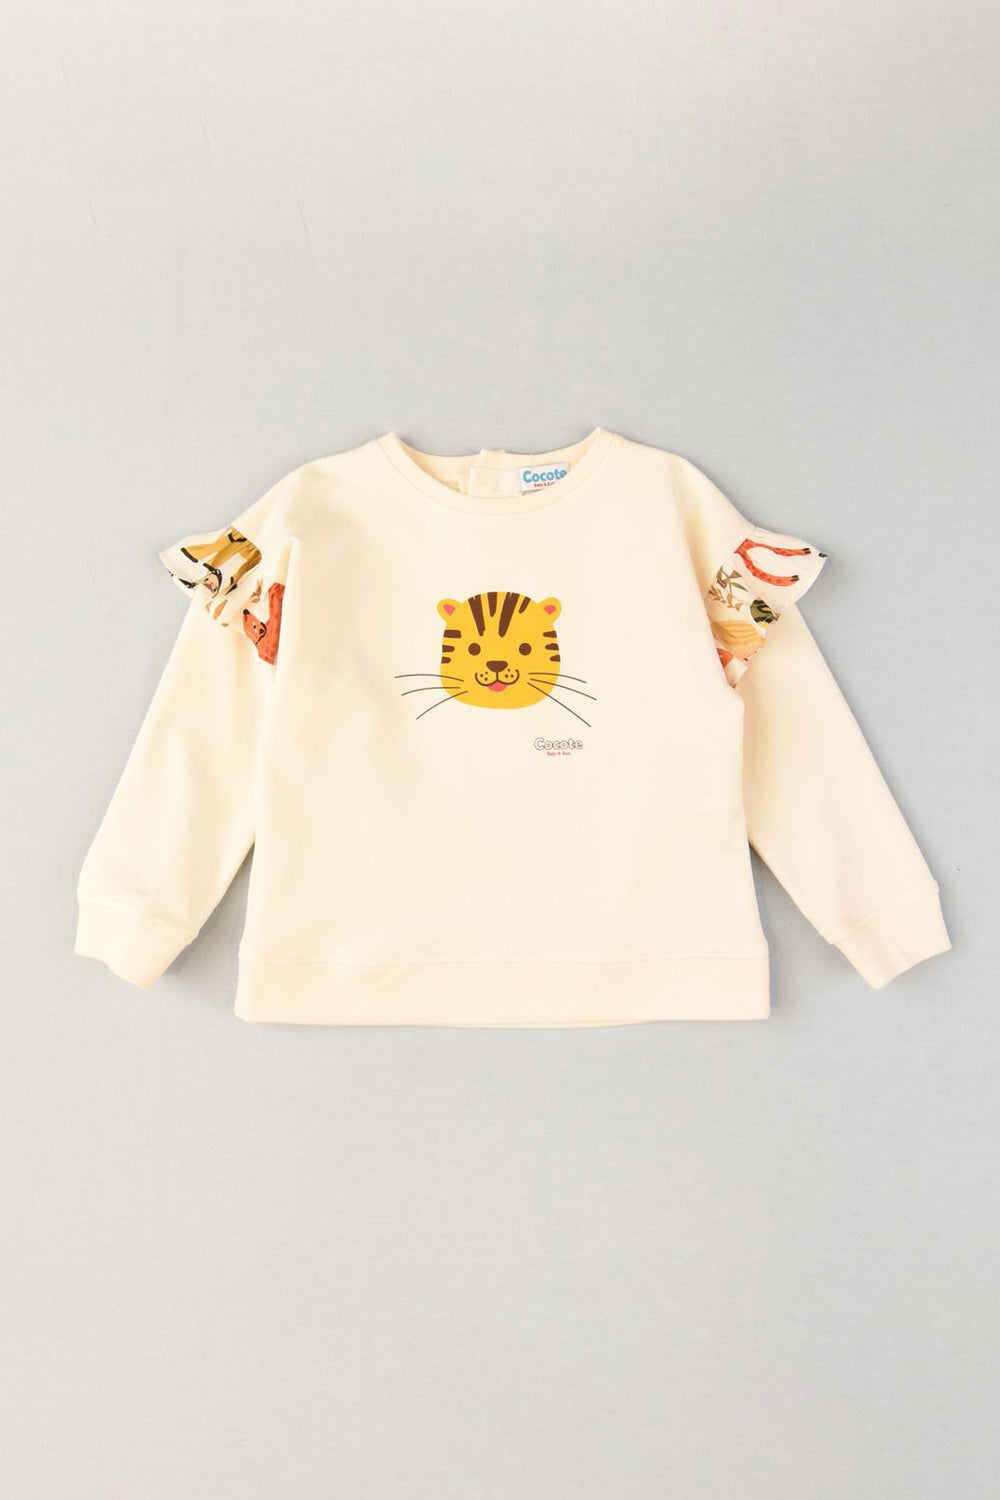 Cocote "Bronte" Cream Tiger Sweatshirt | iphoneandroidapplications